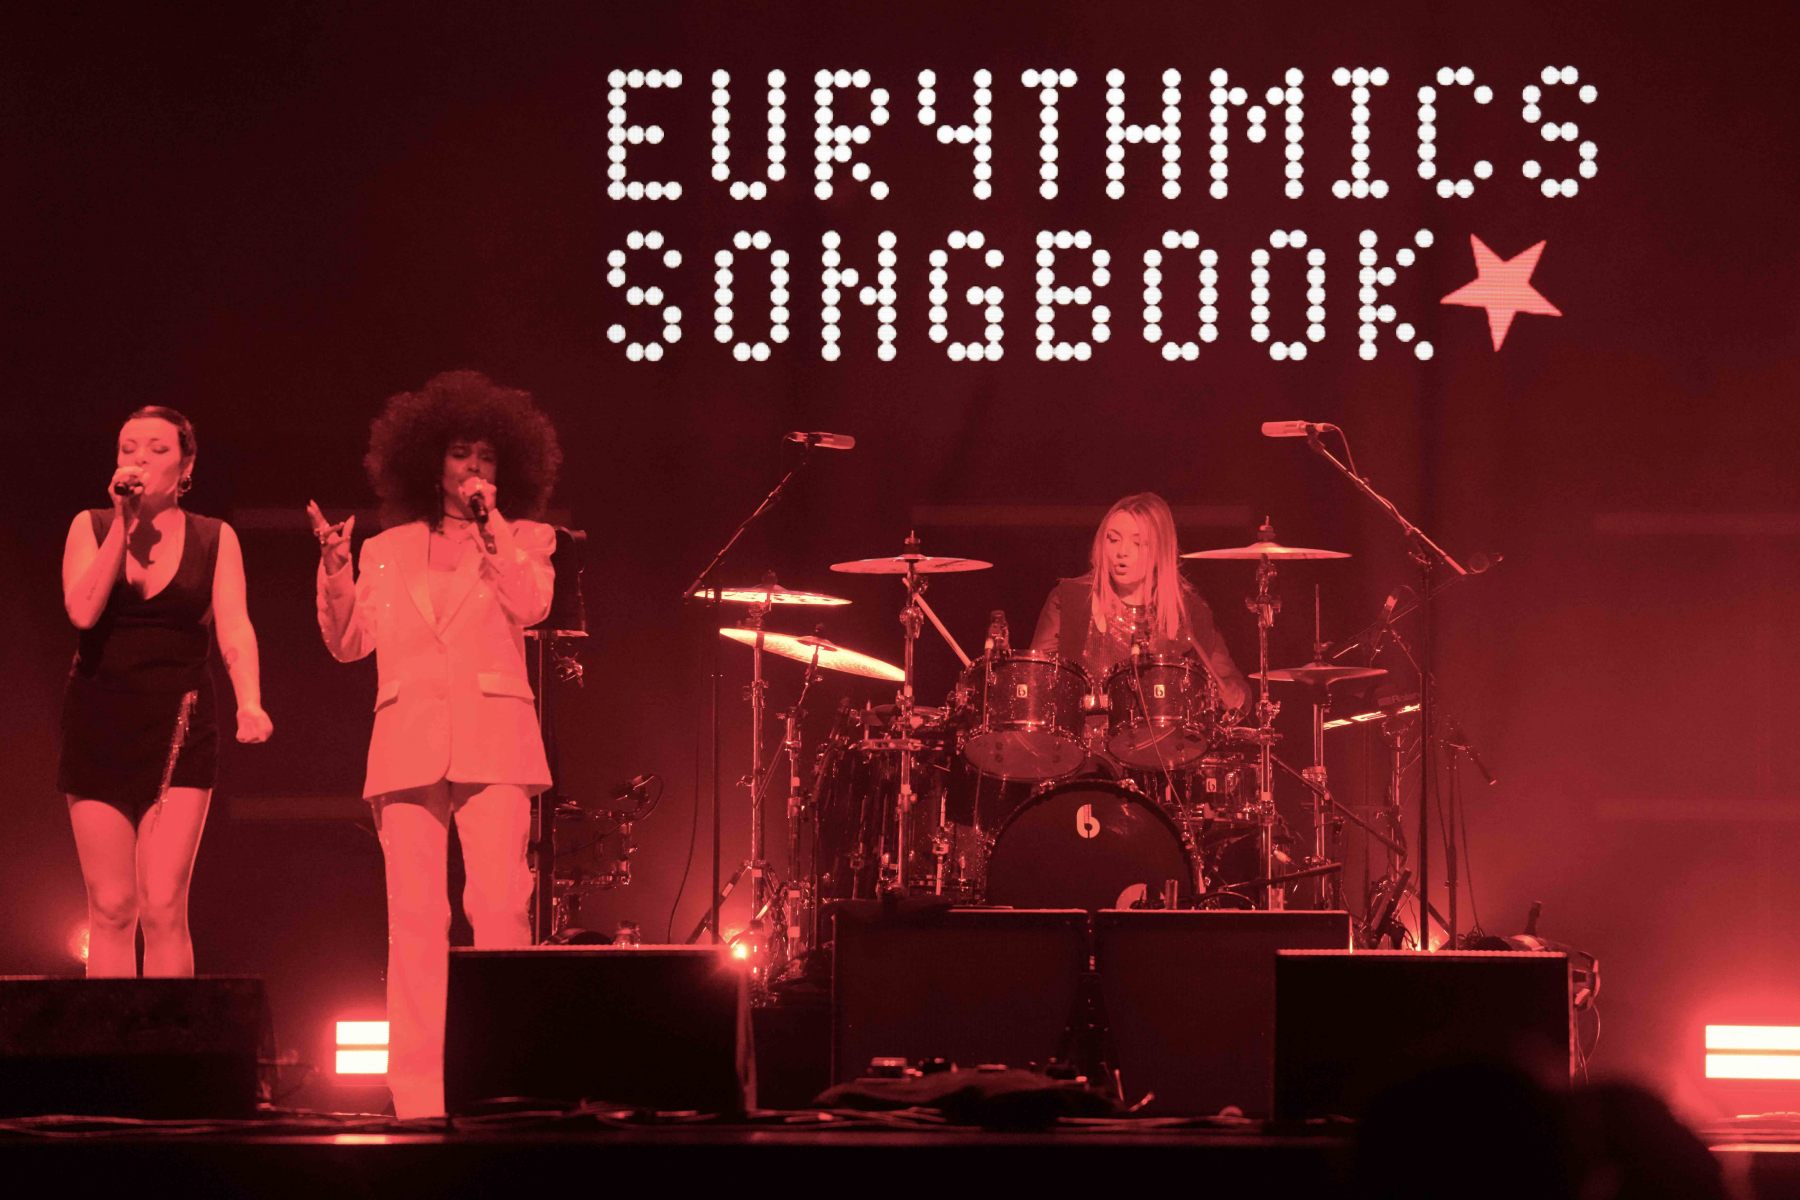 26.11.2023 Dave Stewart Eurythmics Songbook | Sweet Dreams - 40th Anniversary Tour 2023 in der myticket Jahrhunderthalle Frankfurt.